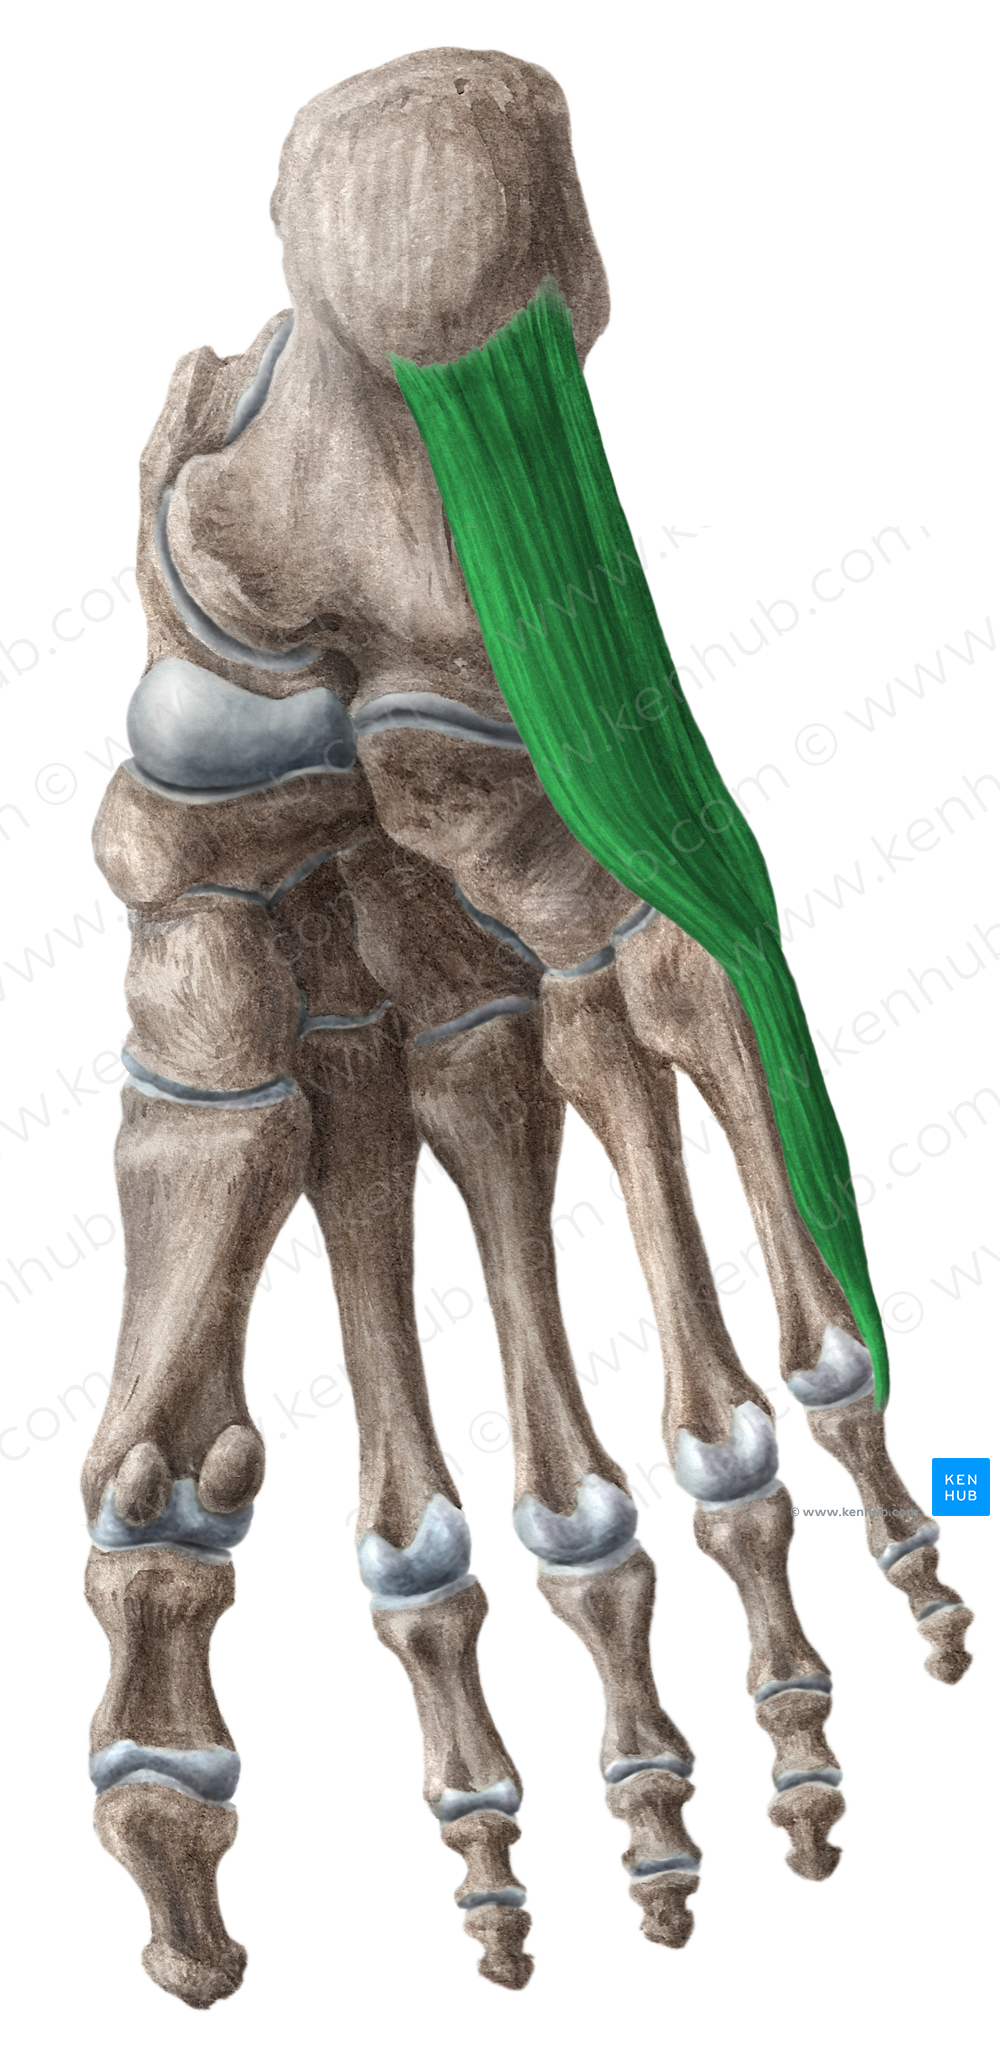 Abductor digiti minimi muscle of foot (#5166)